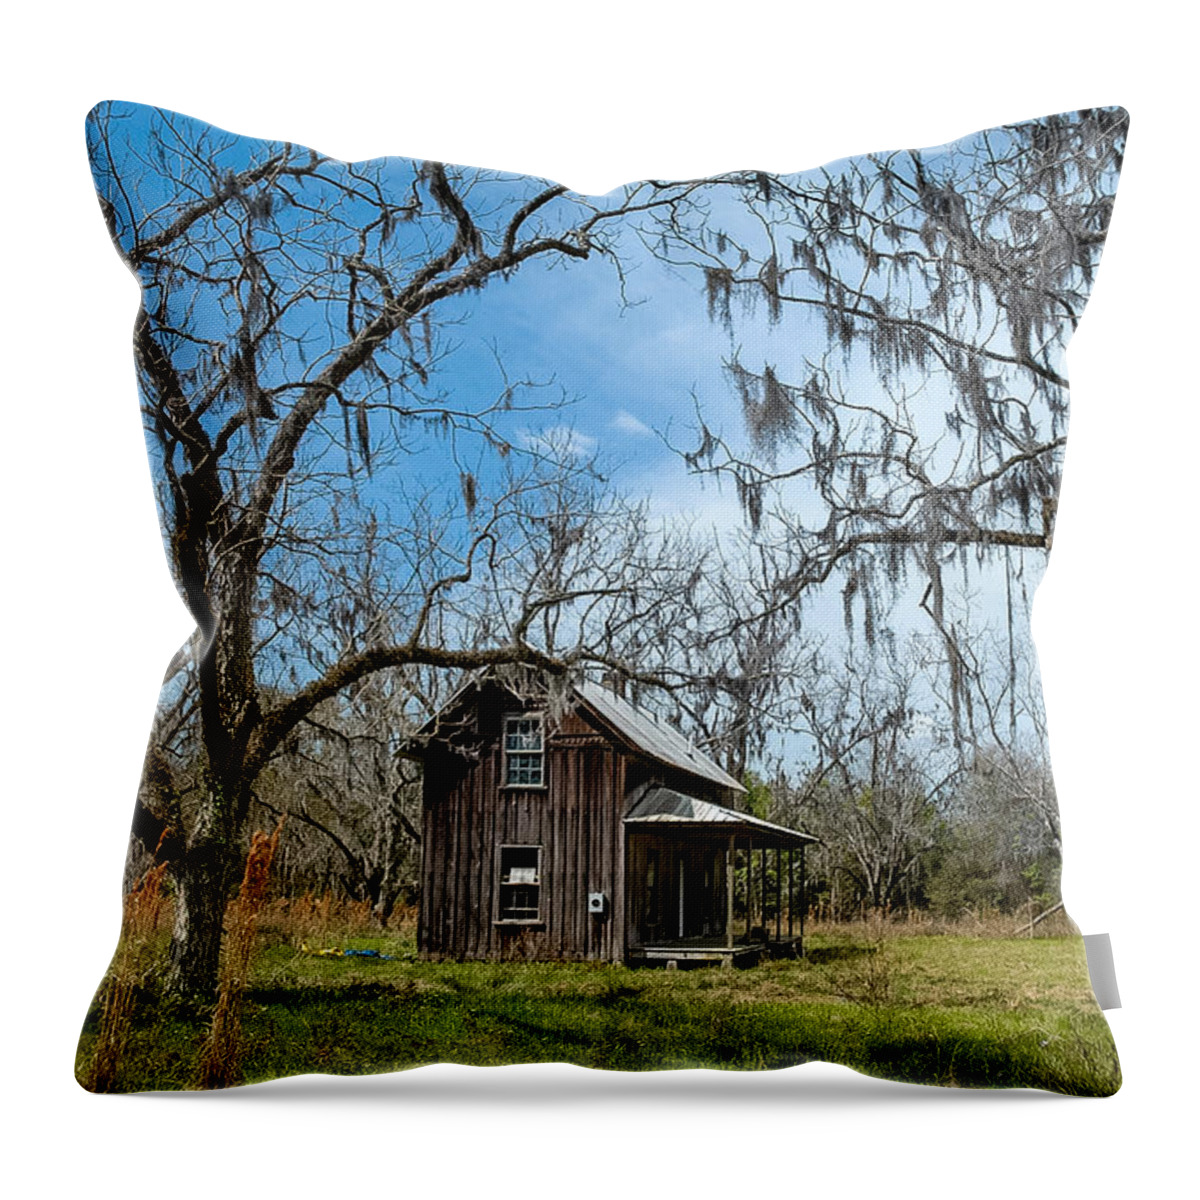 Native-florida Throw Pillow featuring the photograph Native Florida by Bernd Laeschke